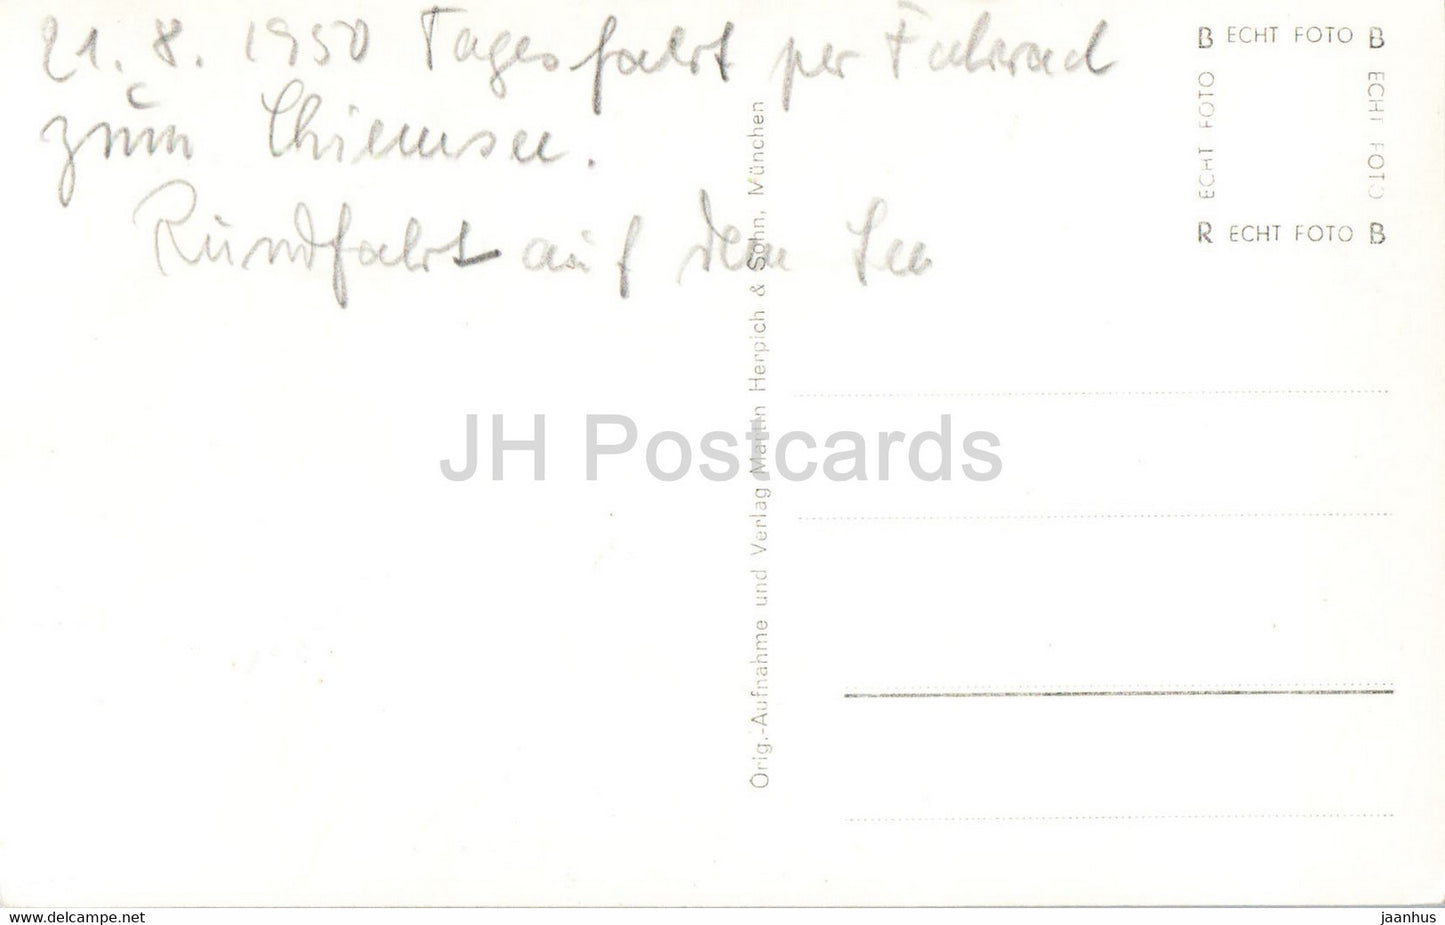 Herreninsel i Chiemsee - 159 - carte postale ancienne - 1950 - Allemagne - utilisé